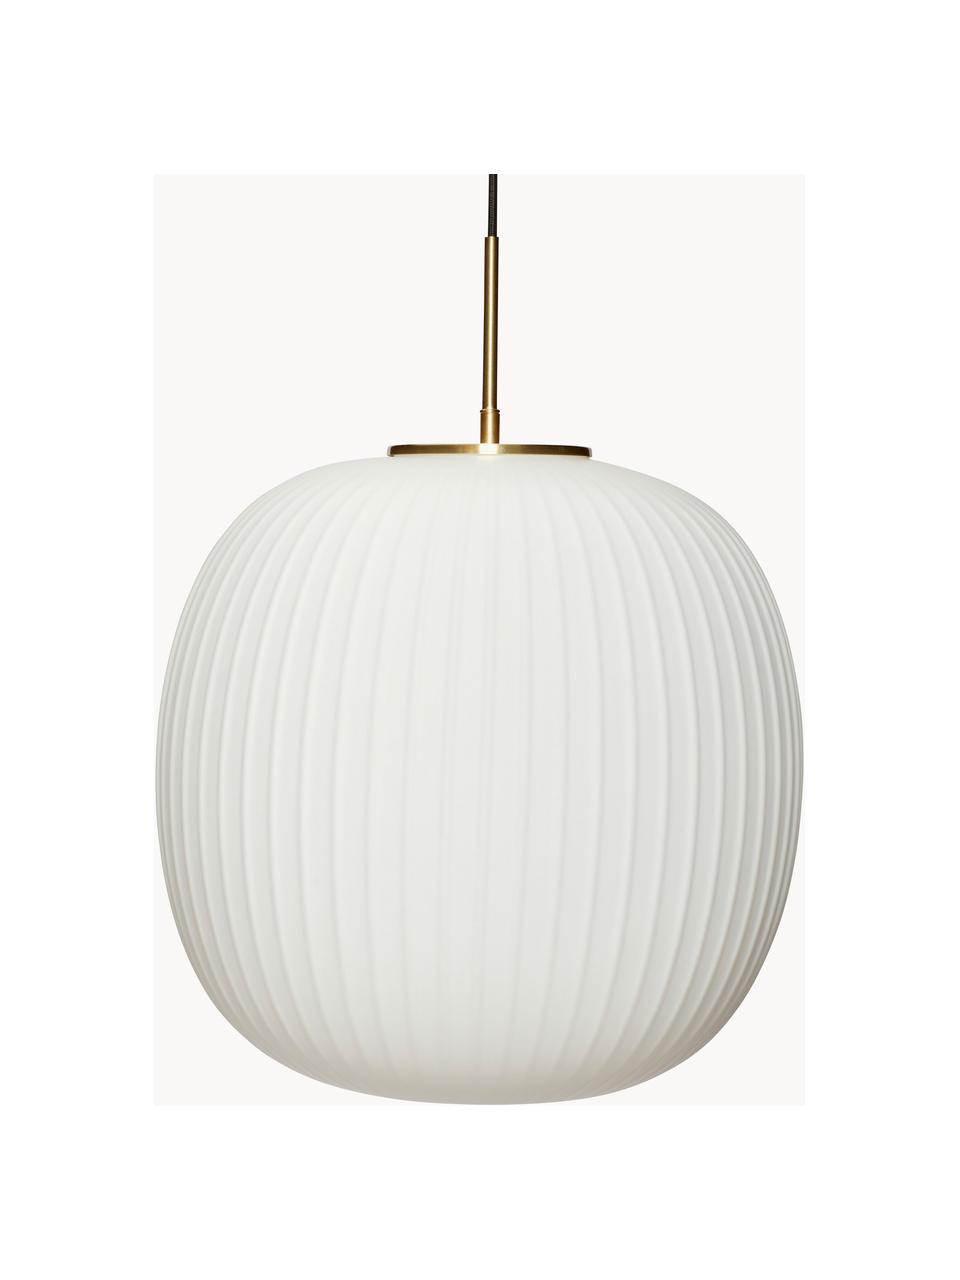 Handgemaakte hanglamp Serene, verschillende formaten, Lampenkap: glas, Wit, goudkleurig, Ø 42 x H 40 cm